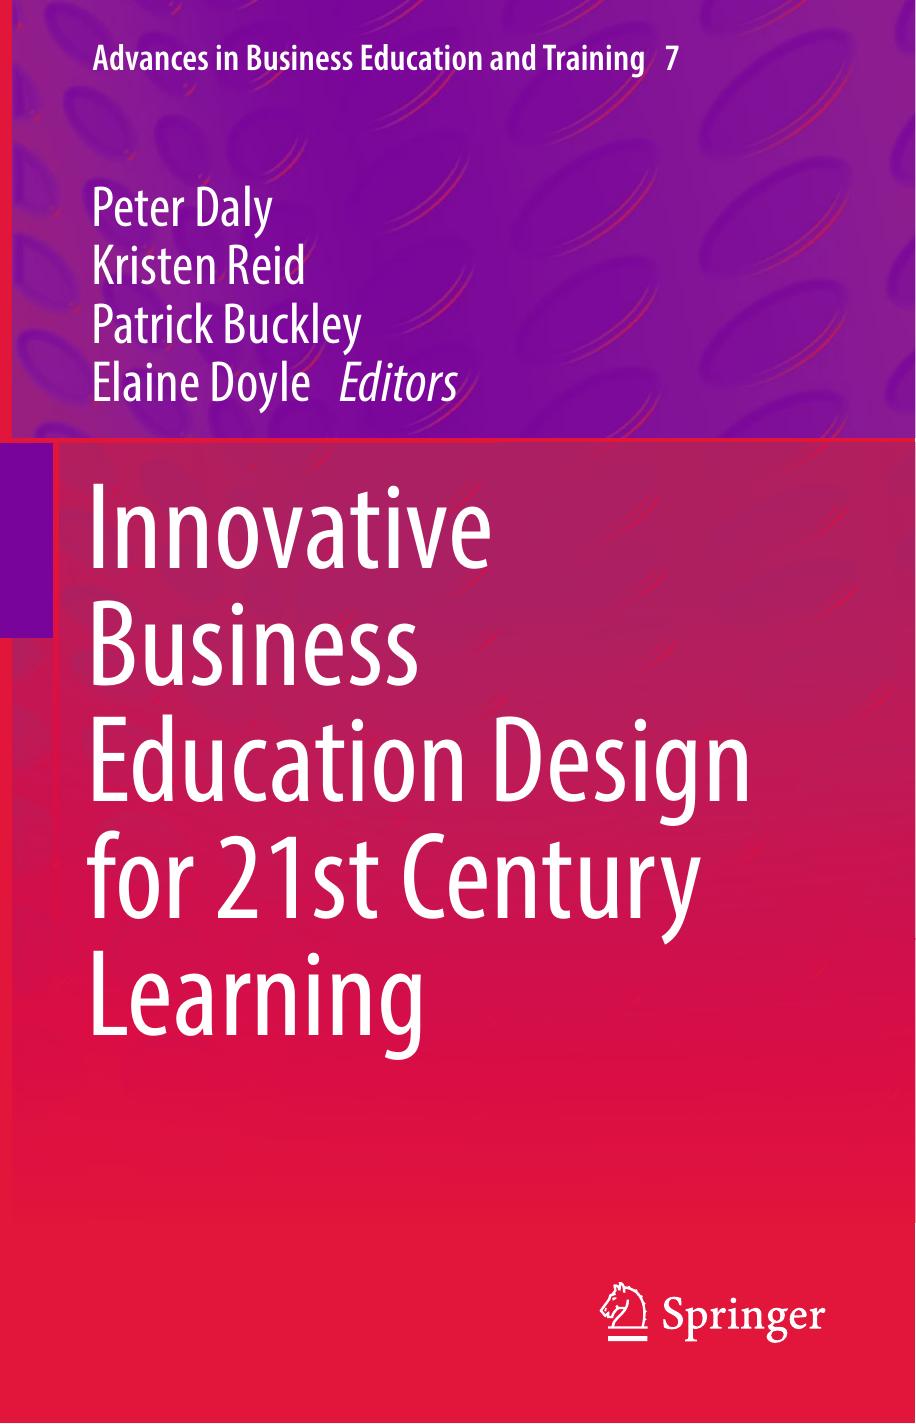 Innovative Business Education Design for 21st Century Learning by Peter Daly, Kristen Reid, Patrick Buckley, Elaine Doyle (eds.) (z-lib.org)